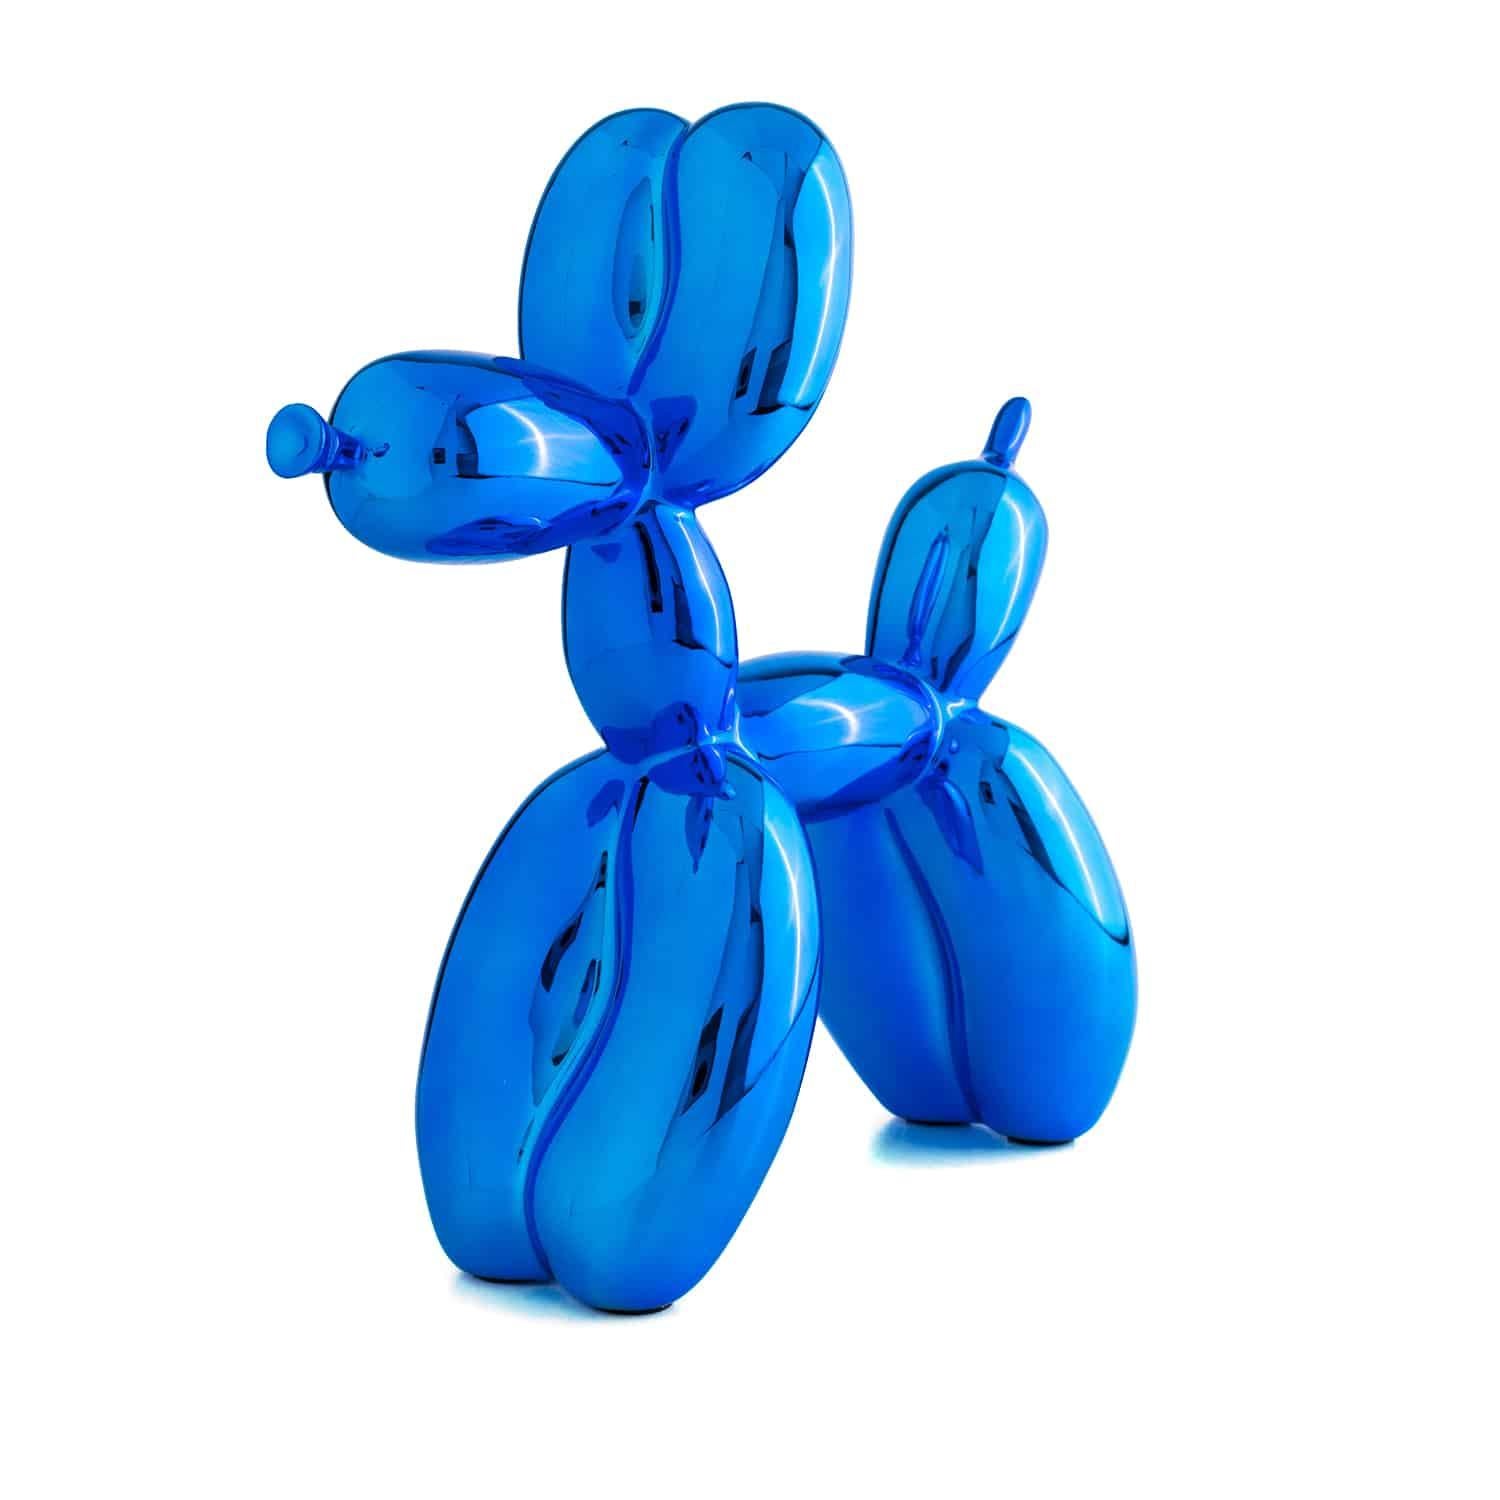 Figurative Sculpture After Jeff Koons - Dog Balloon Dog (d'après) 